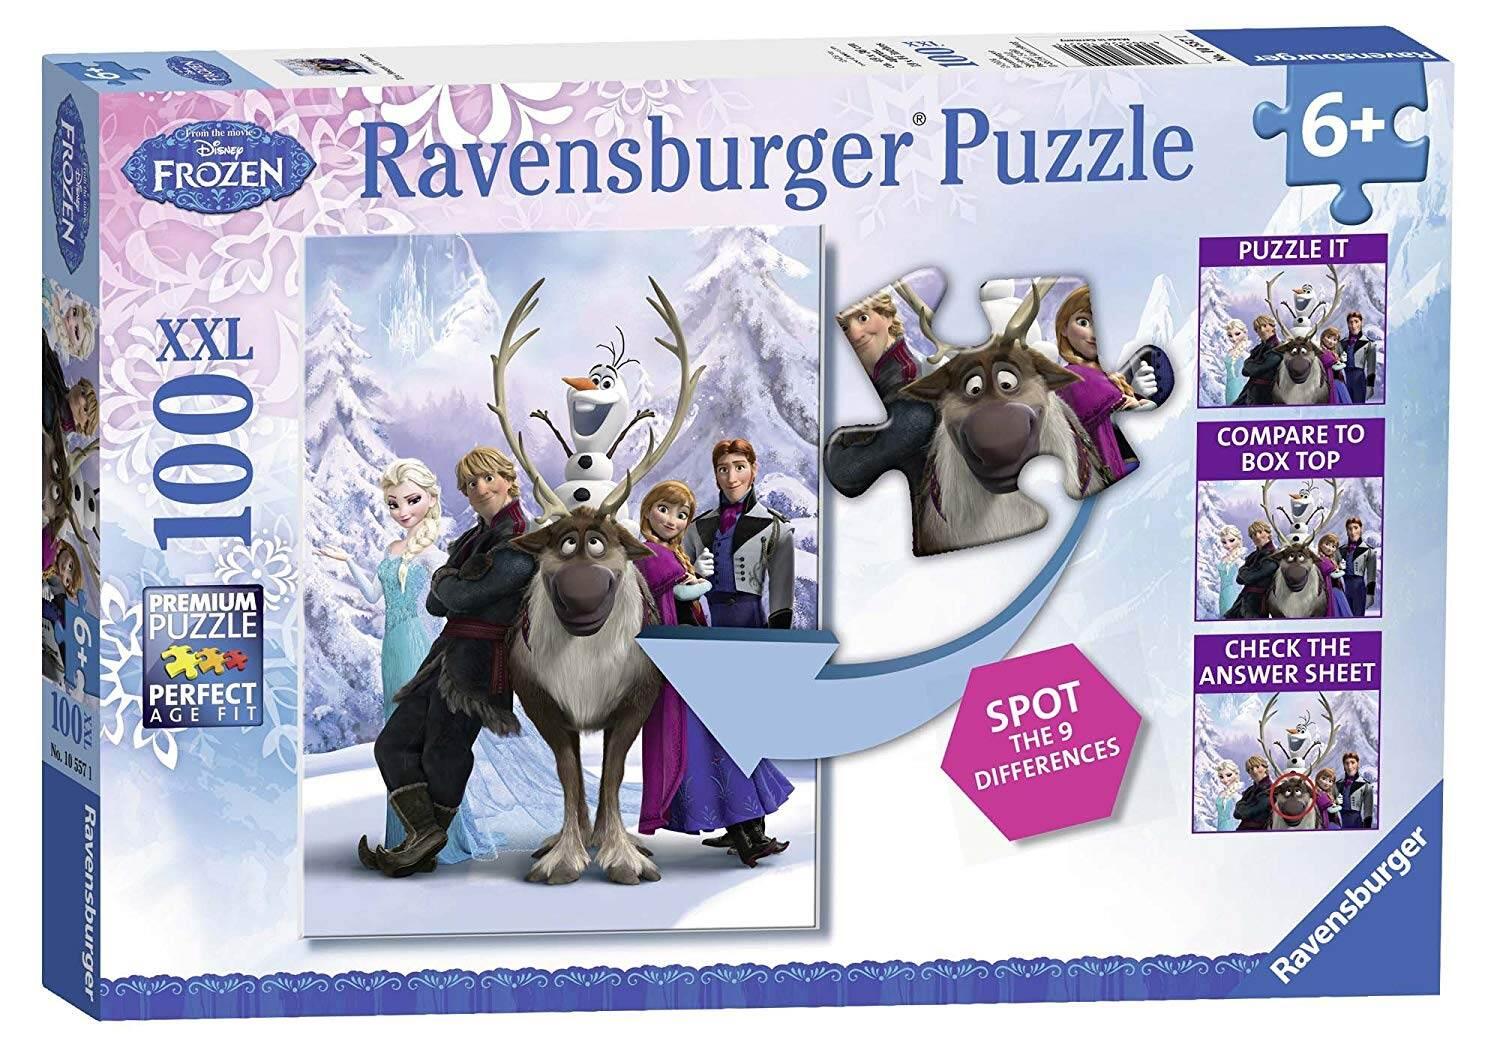 100 Teile Eisige Puzzle XXL Unterschiede Ravensburger Frozen